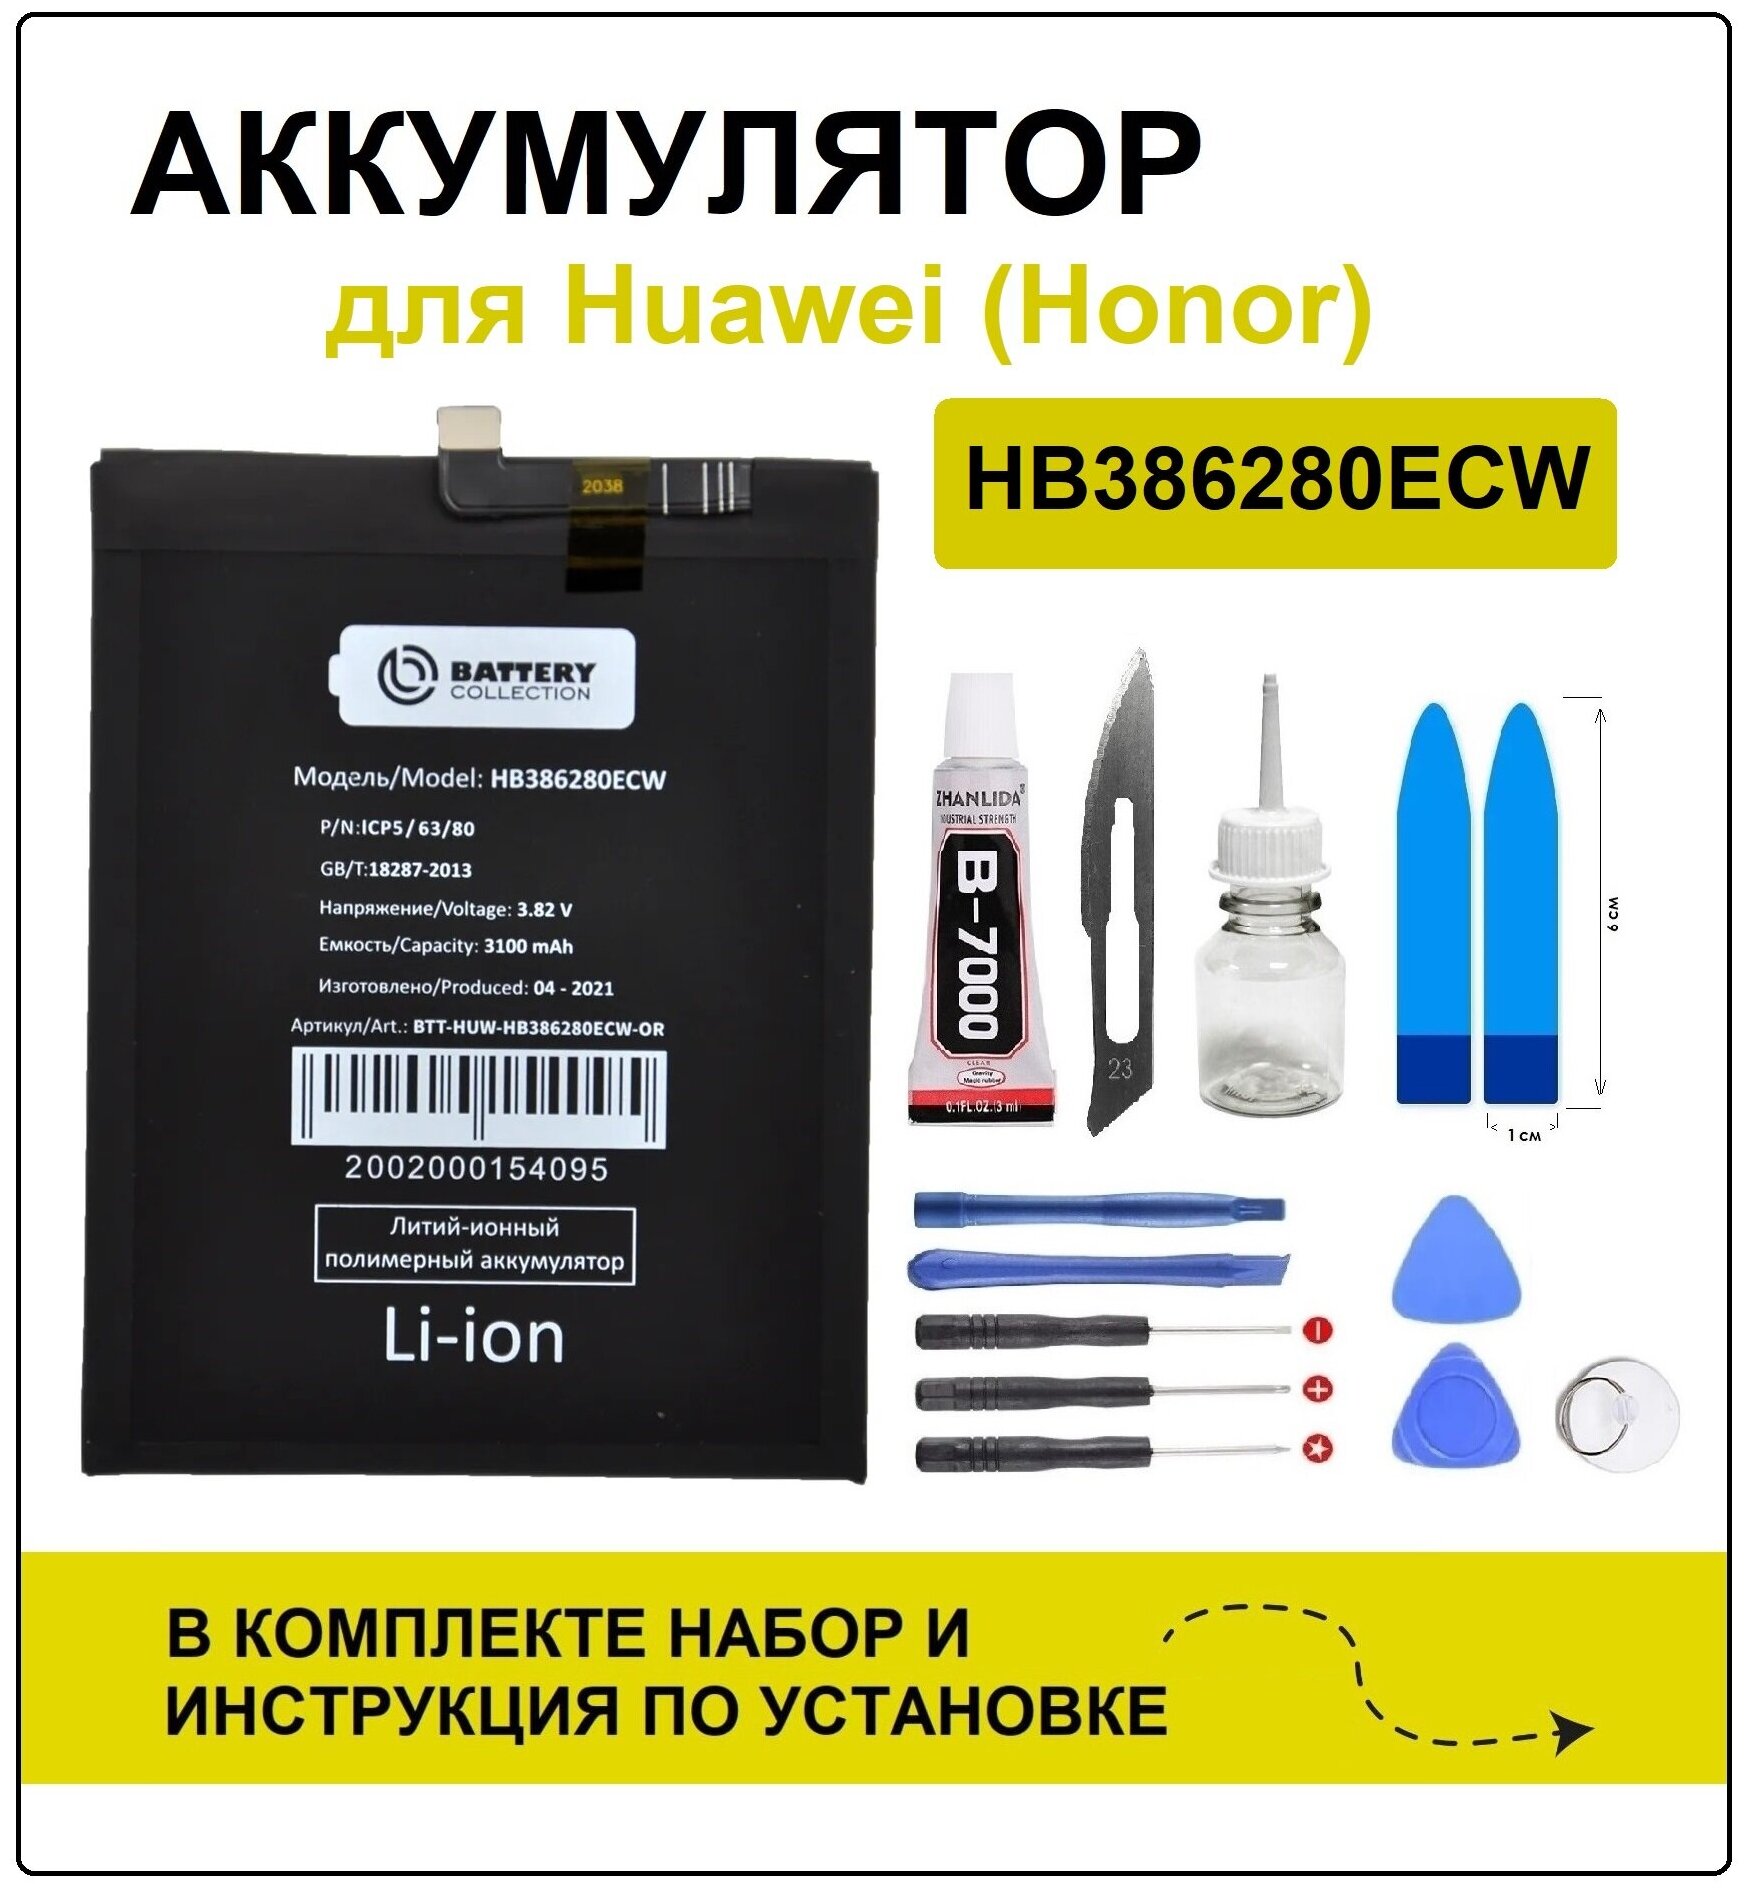 Аккумулятор для Huawei P10 / Honor 9 (HB386280ECW) Battery Collection (Премиум) + набор для установки